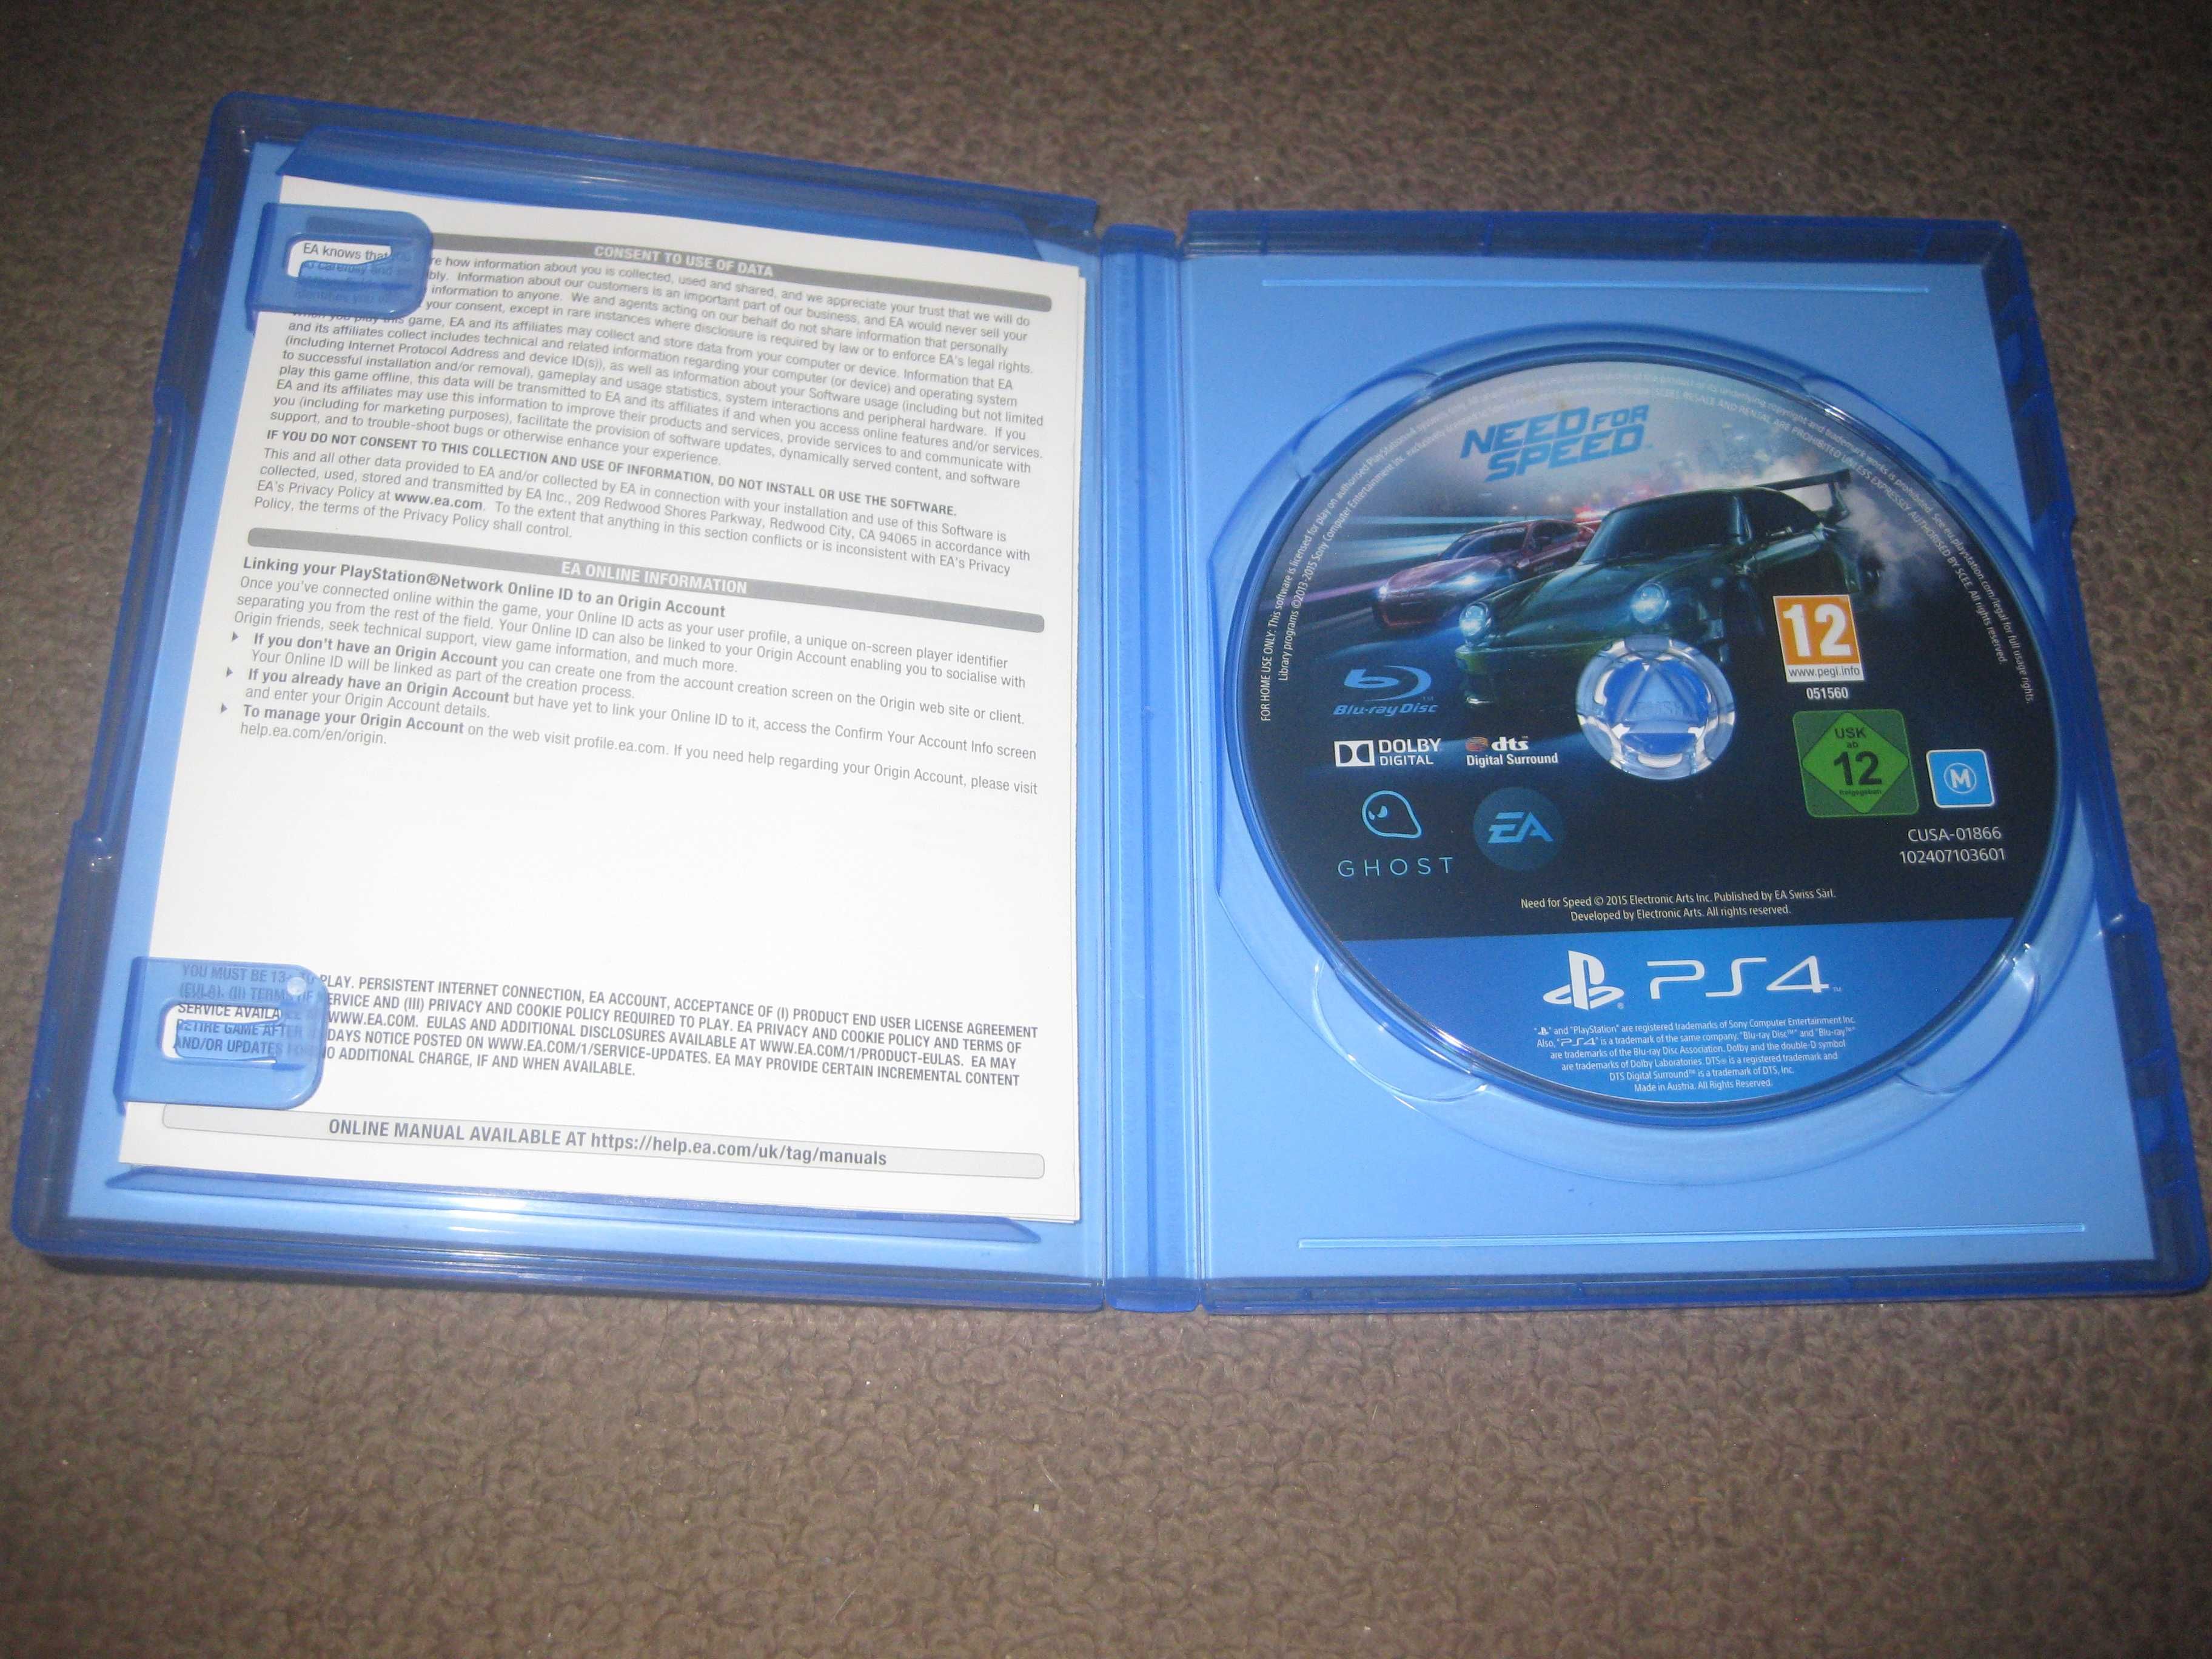 Jogo "Need For Speed" para a Playstation 4/Impecável!